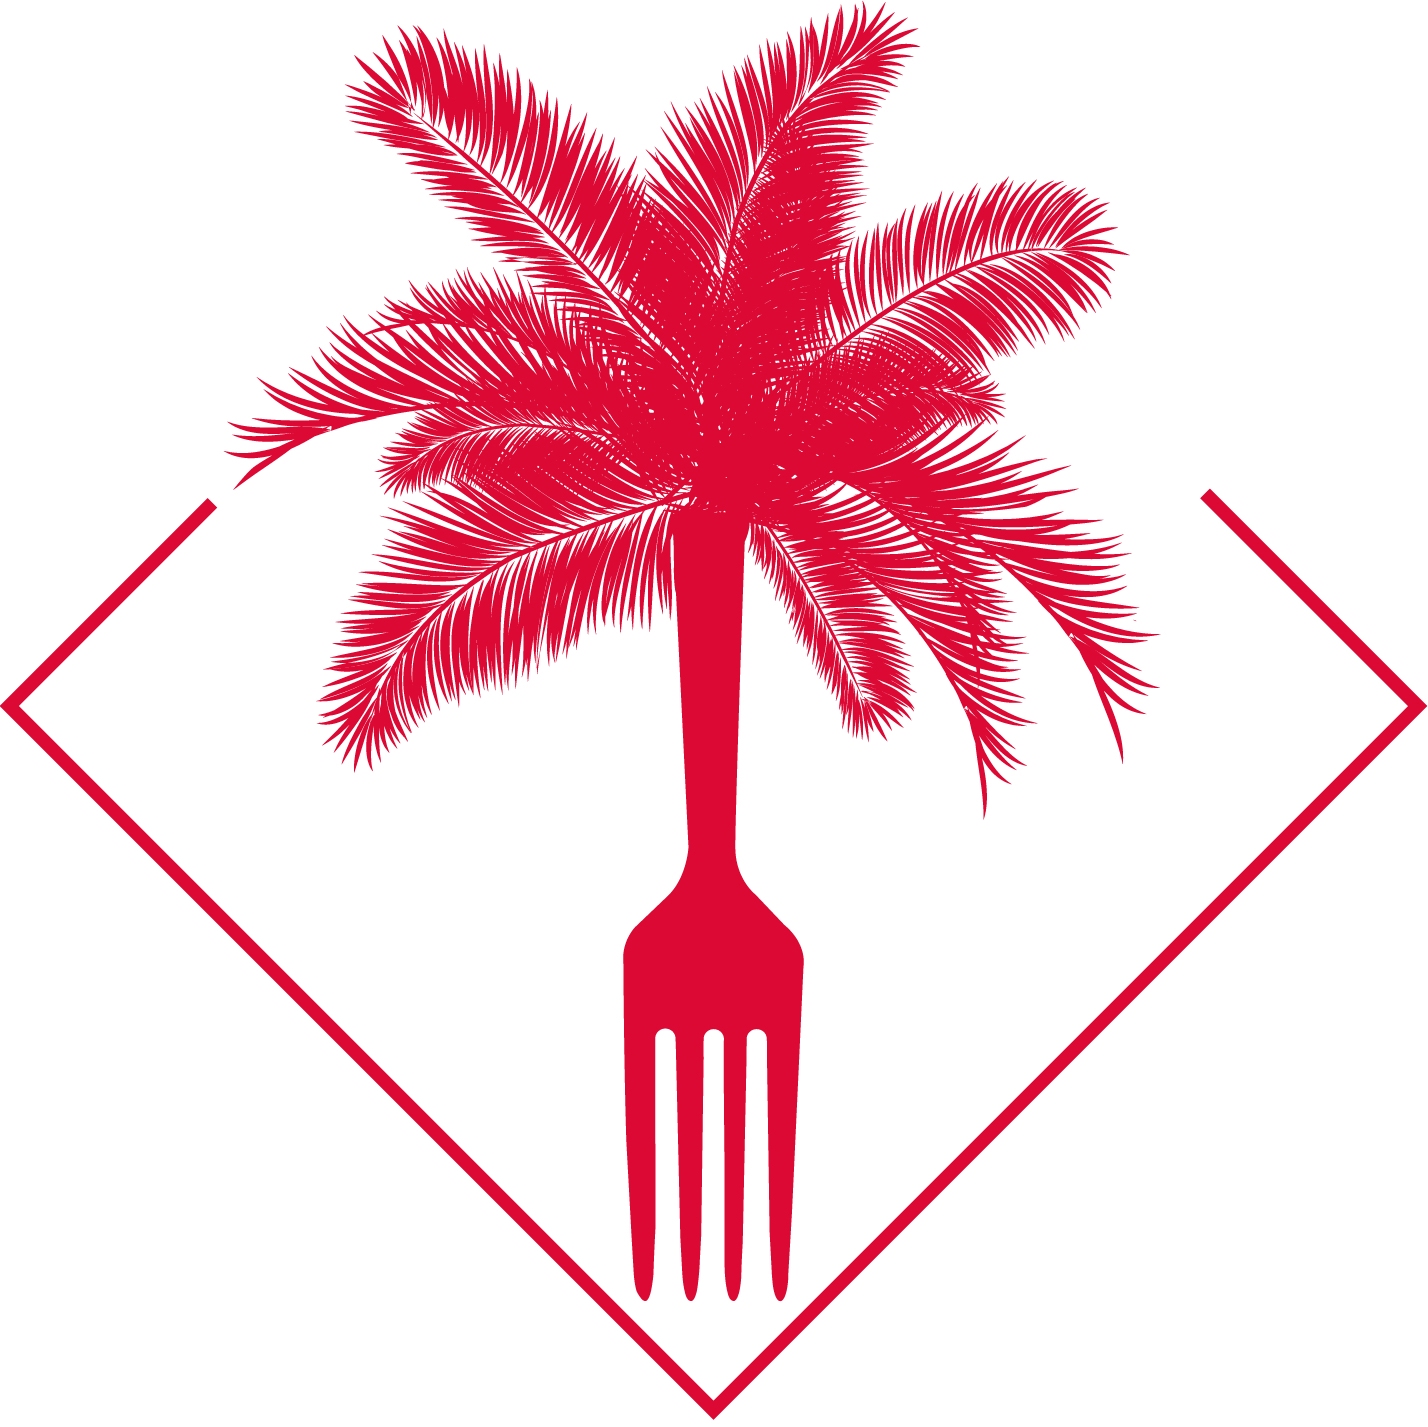 Guadeloupe : Foodîles organise ce lundi son premier #rdvfoodiles